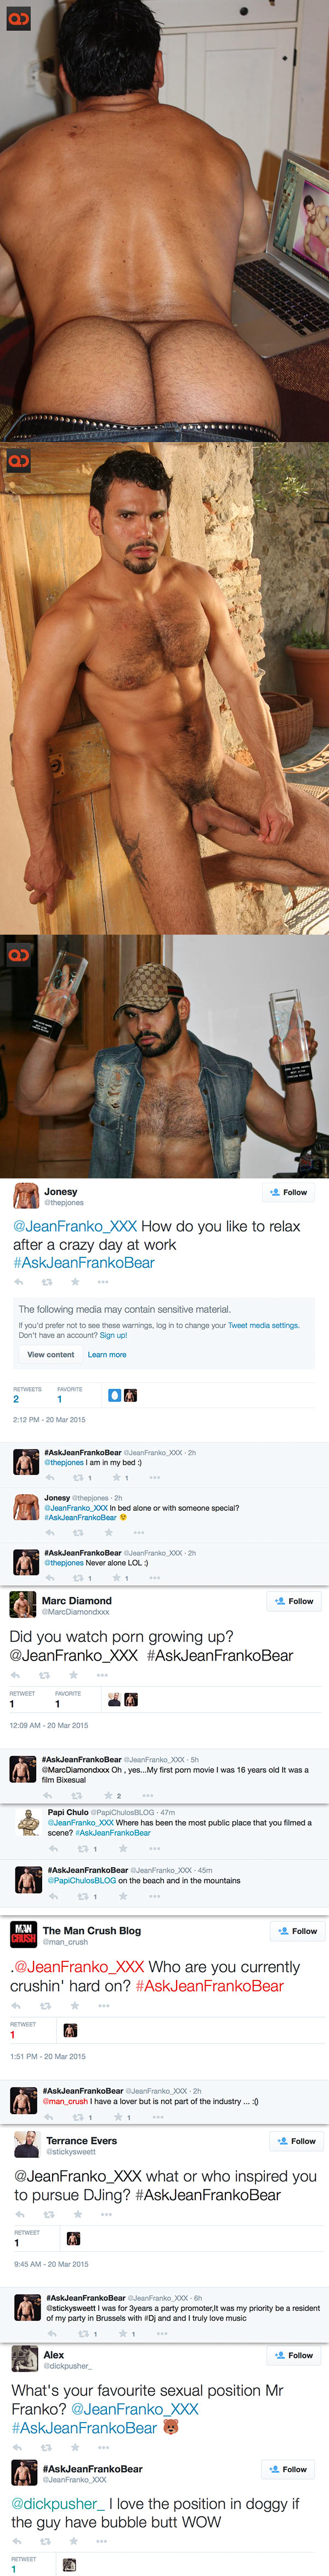 Spanish Porn Star Jean Franko Answers QC Readers Questions On Twitter - #AskJeanFrankoBear